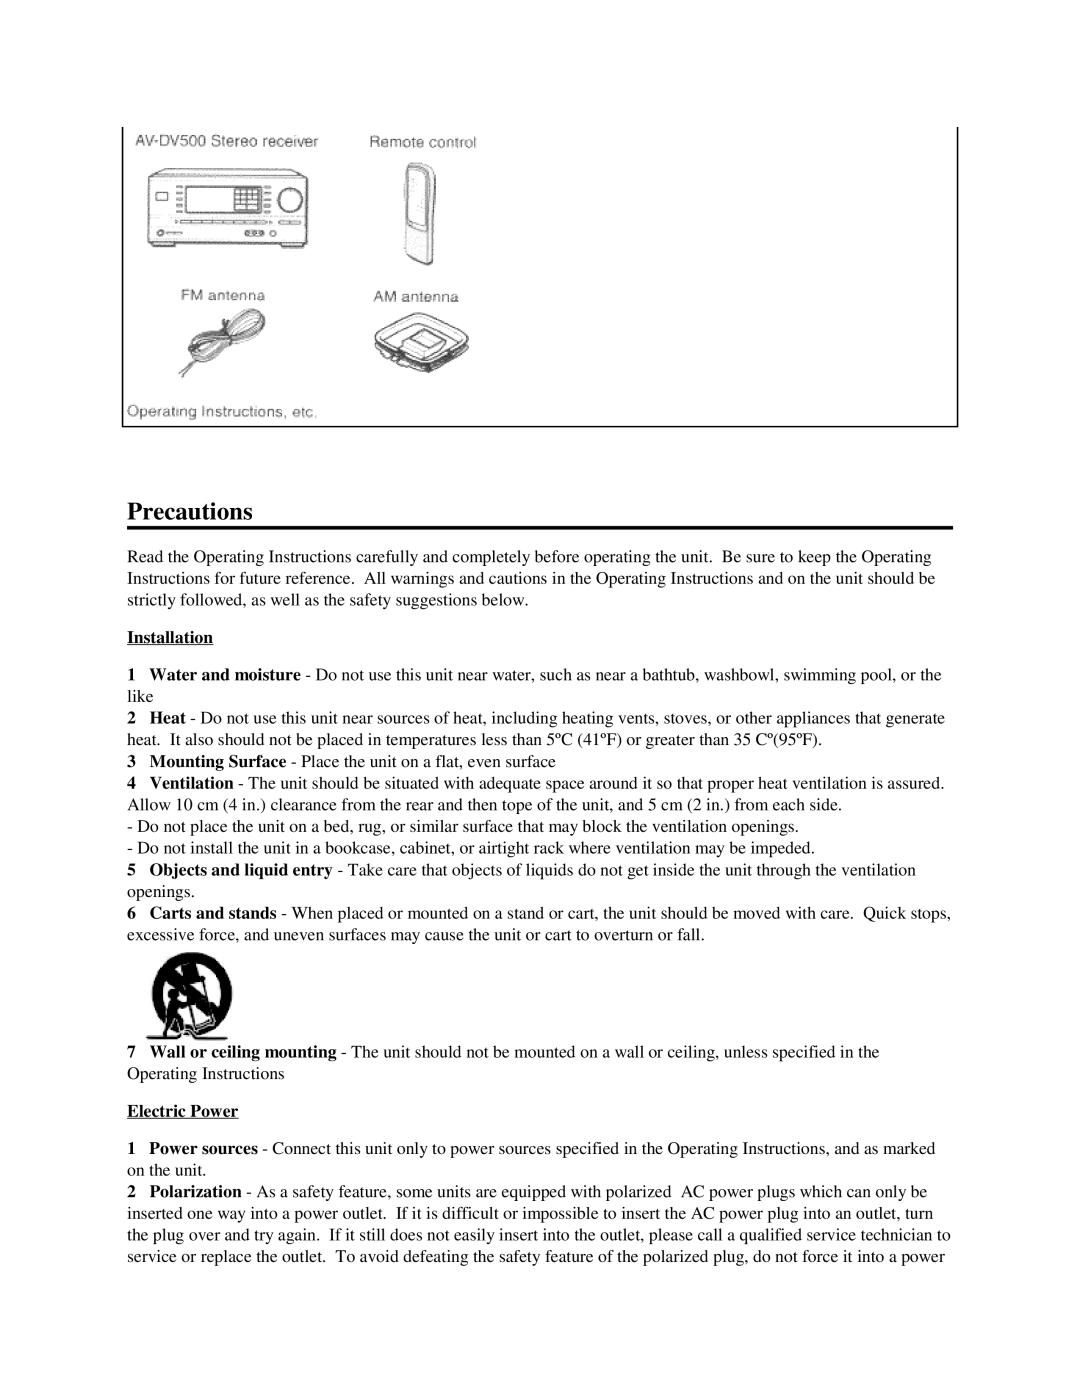 Aiwa AV-DV500 manual Precautions, Installation, Electric Power 